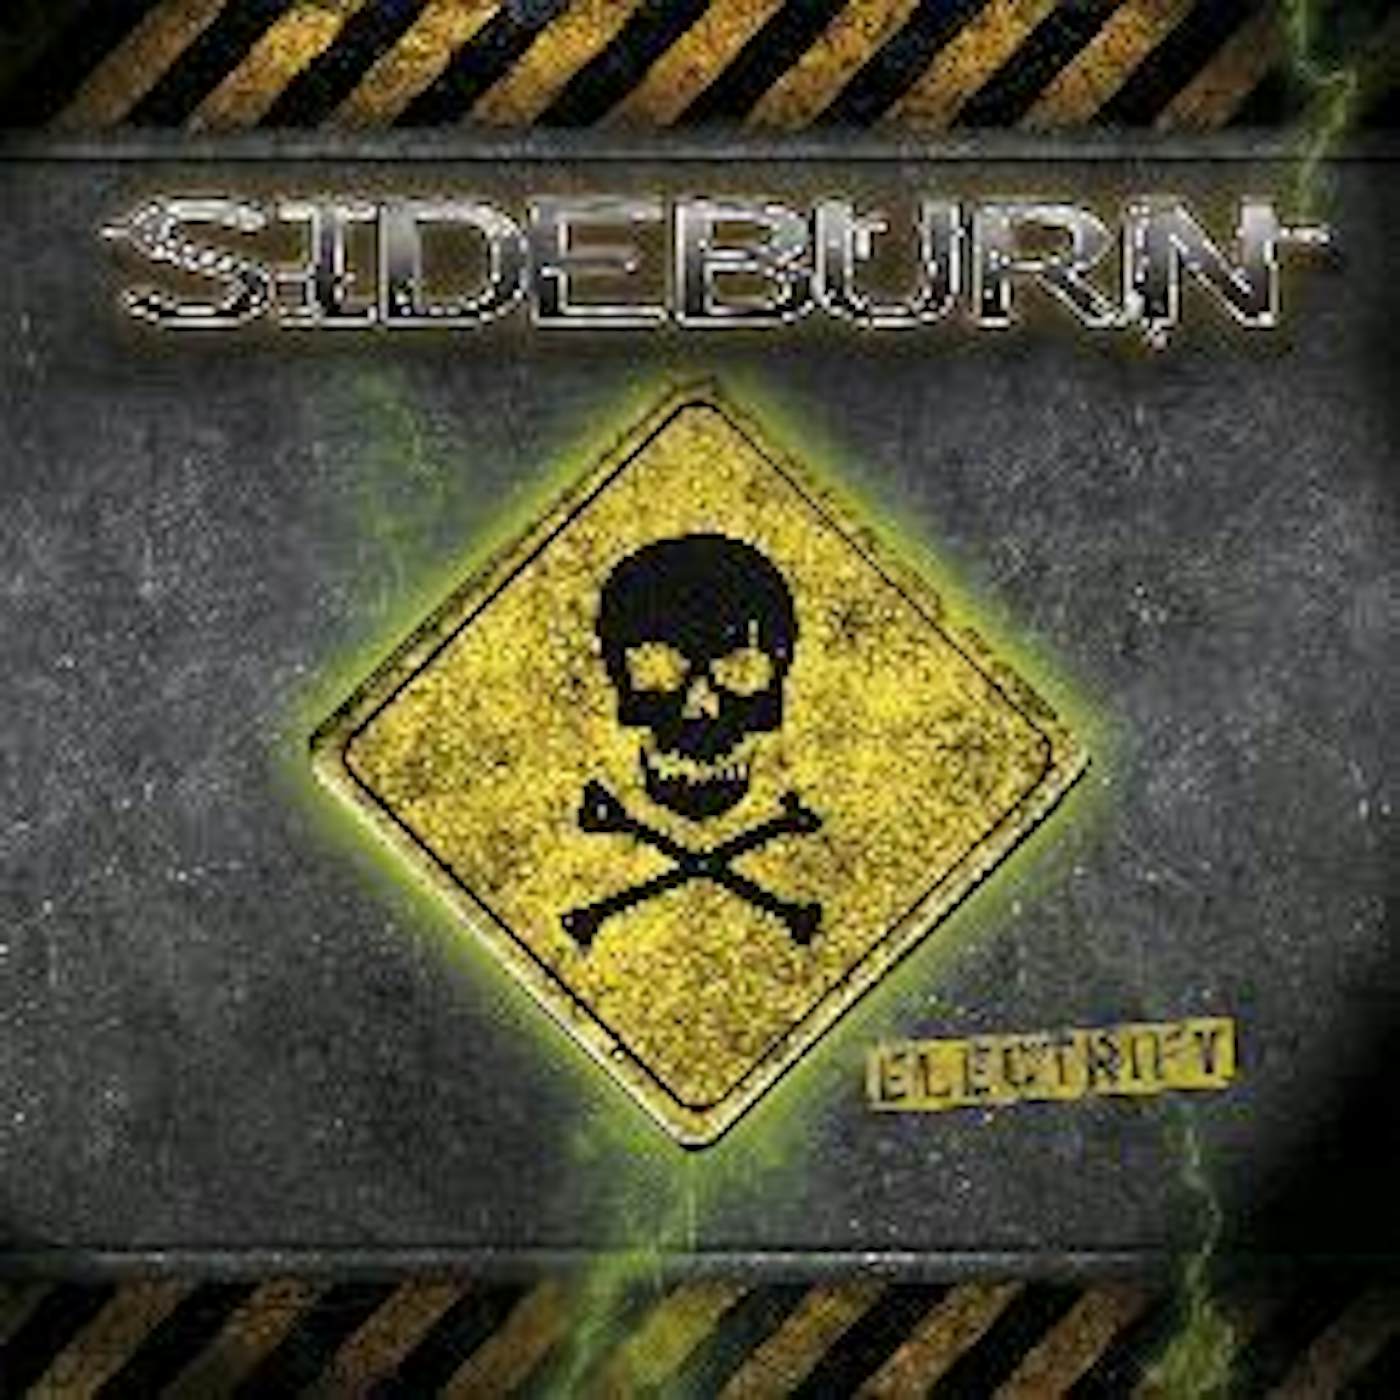 Sideburn ELECTRIFY CD CD